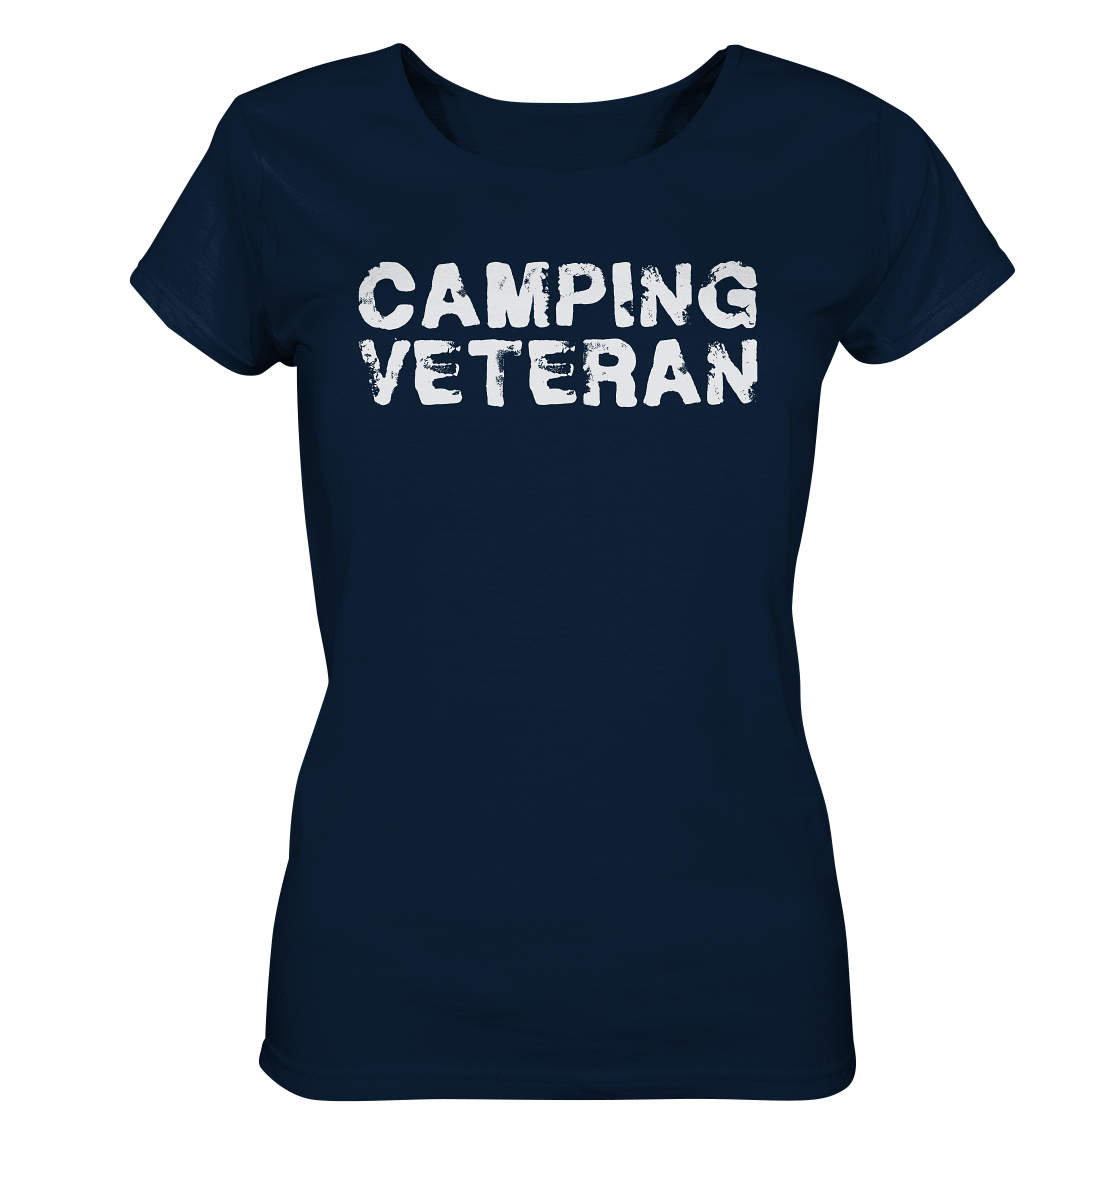 Camping Veteran - Ladies Organic Shirt